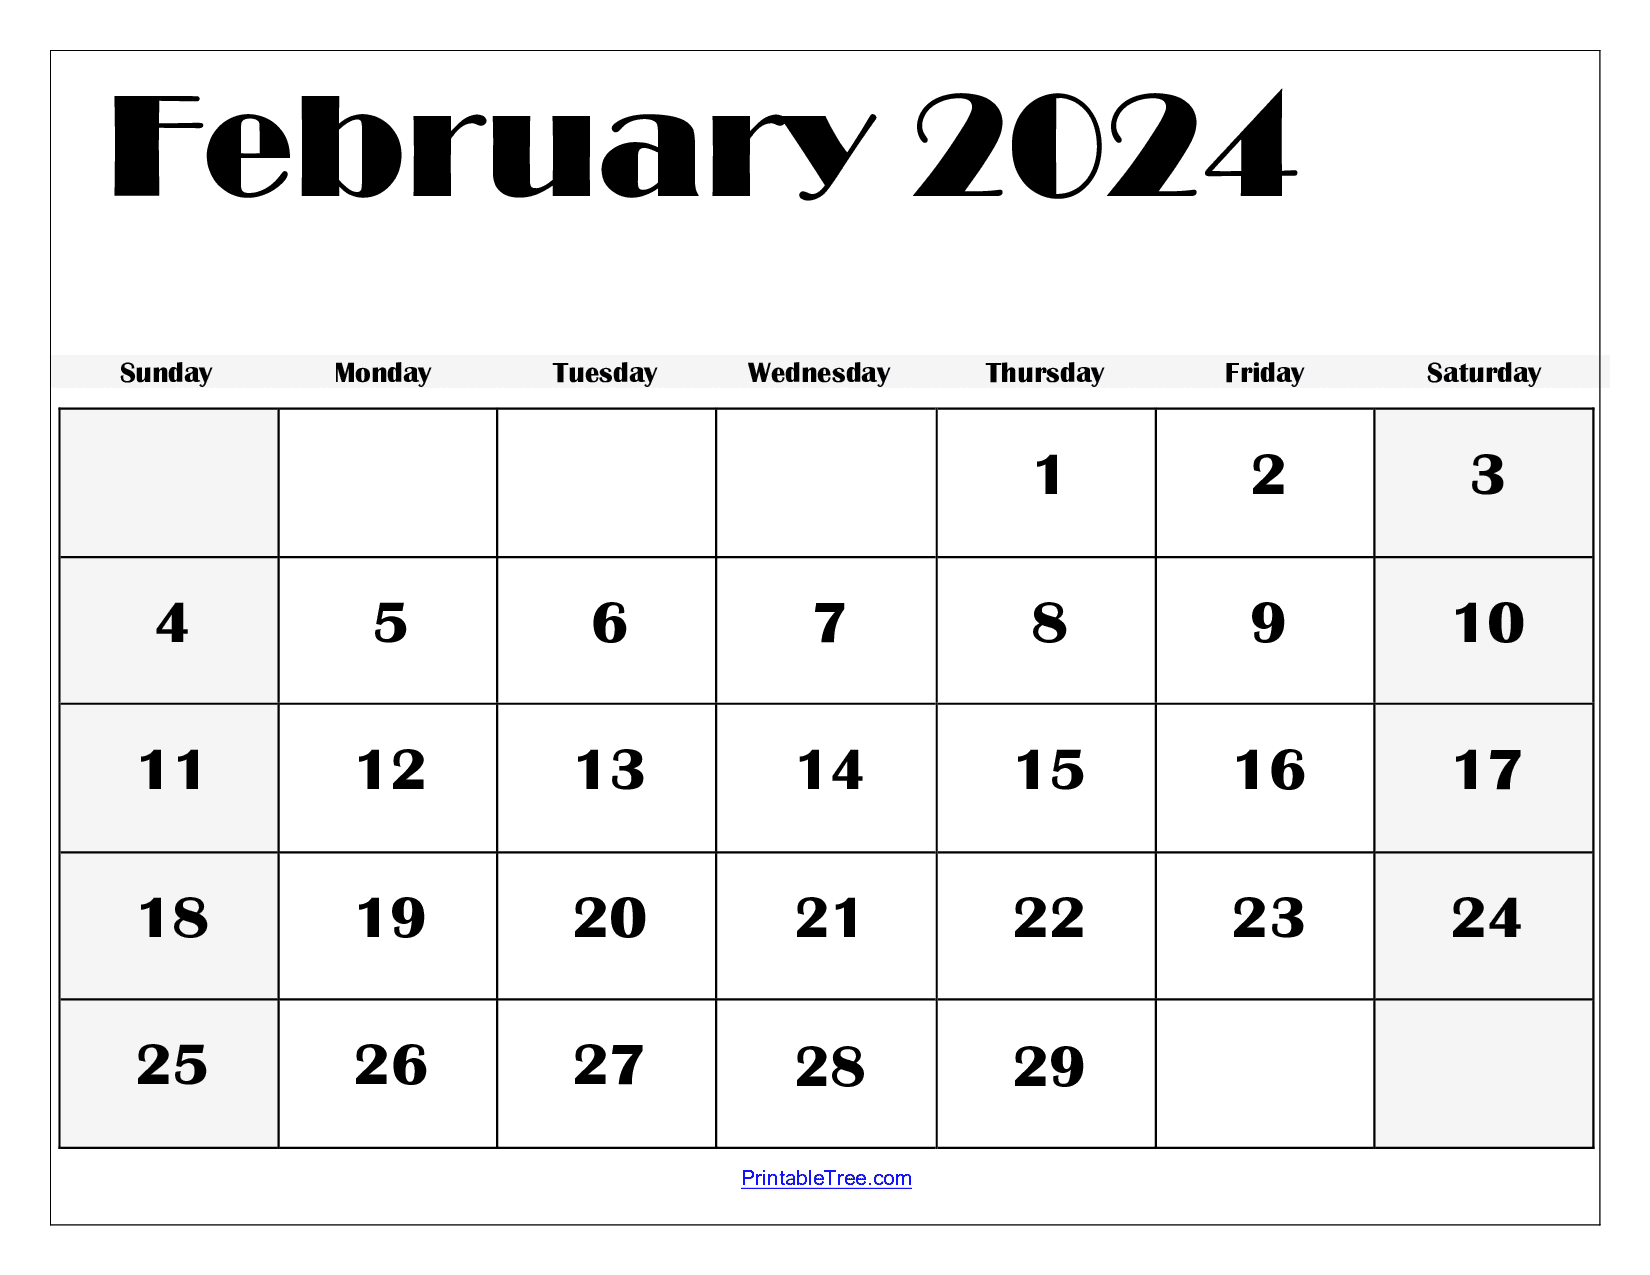 February 2024 Calendar Printable Pdf Template With Holidays for Calendar Printable Feb 2024